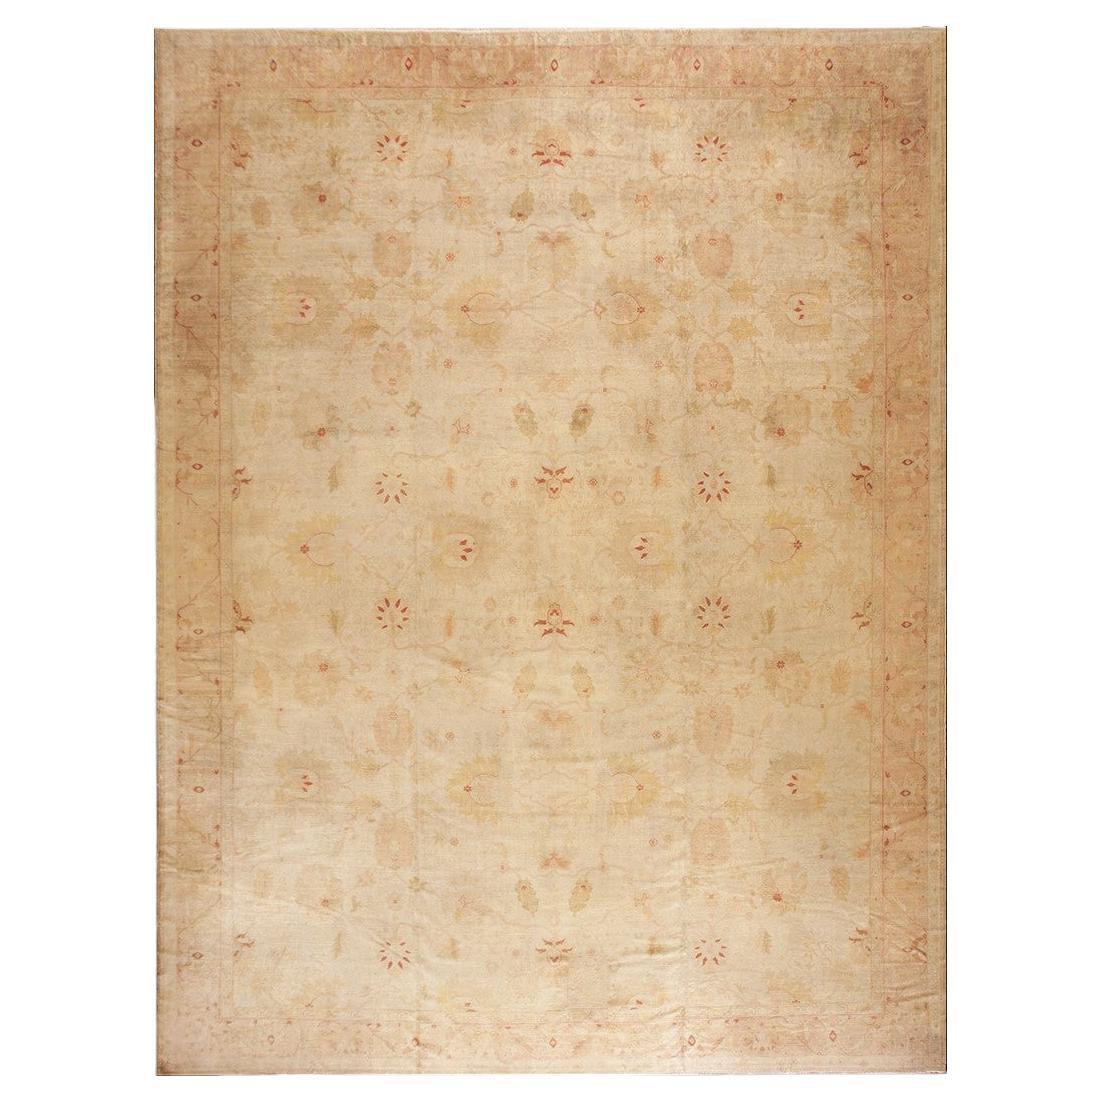 Early 20th Century Turkish Borlou Oushak Carpet ( 15'4" x 19'6" - 467 x 594 )